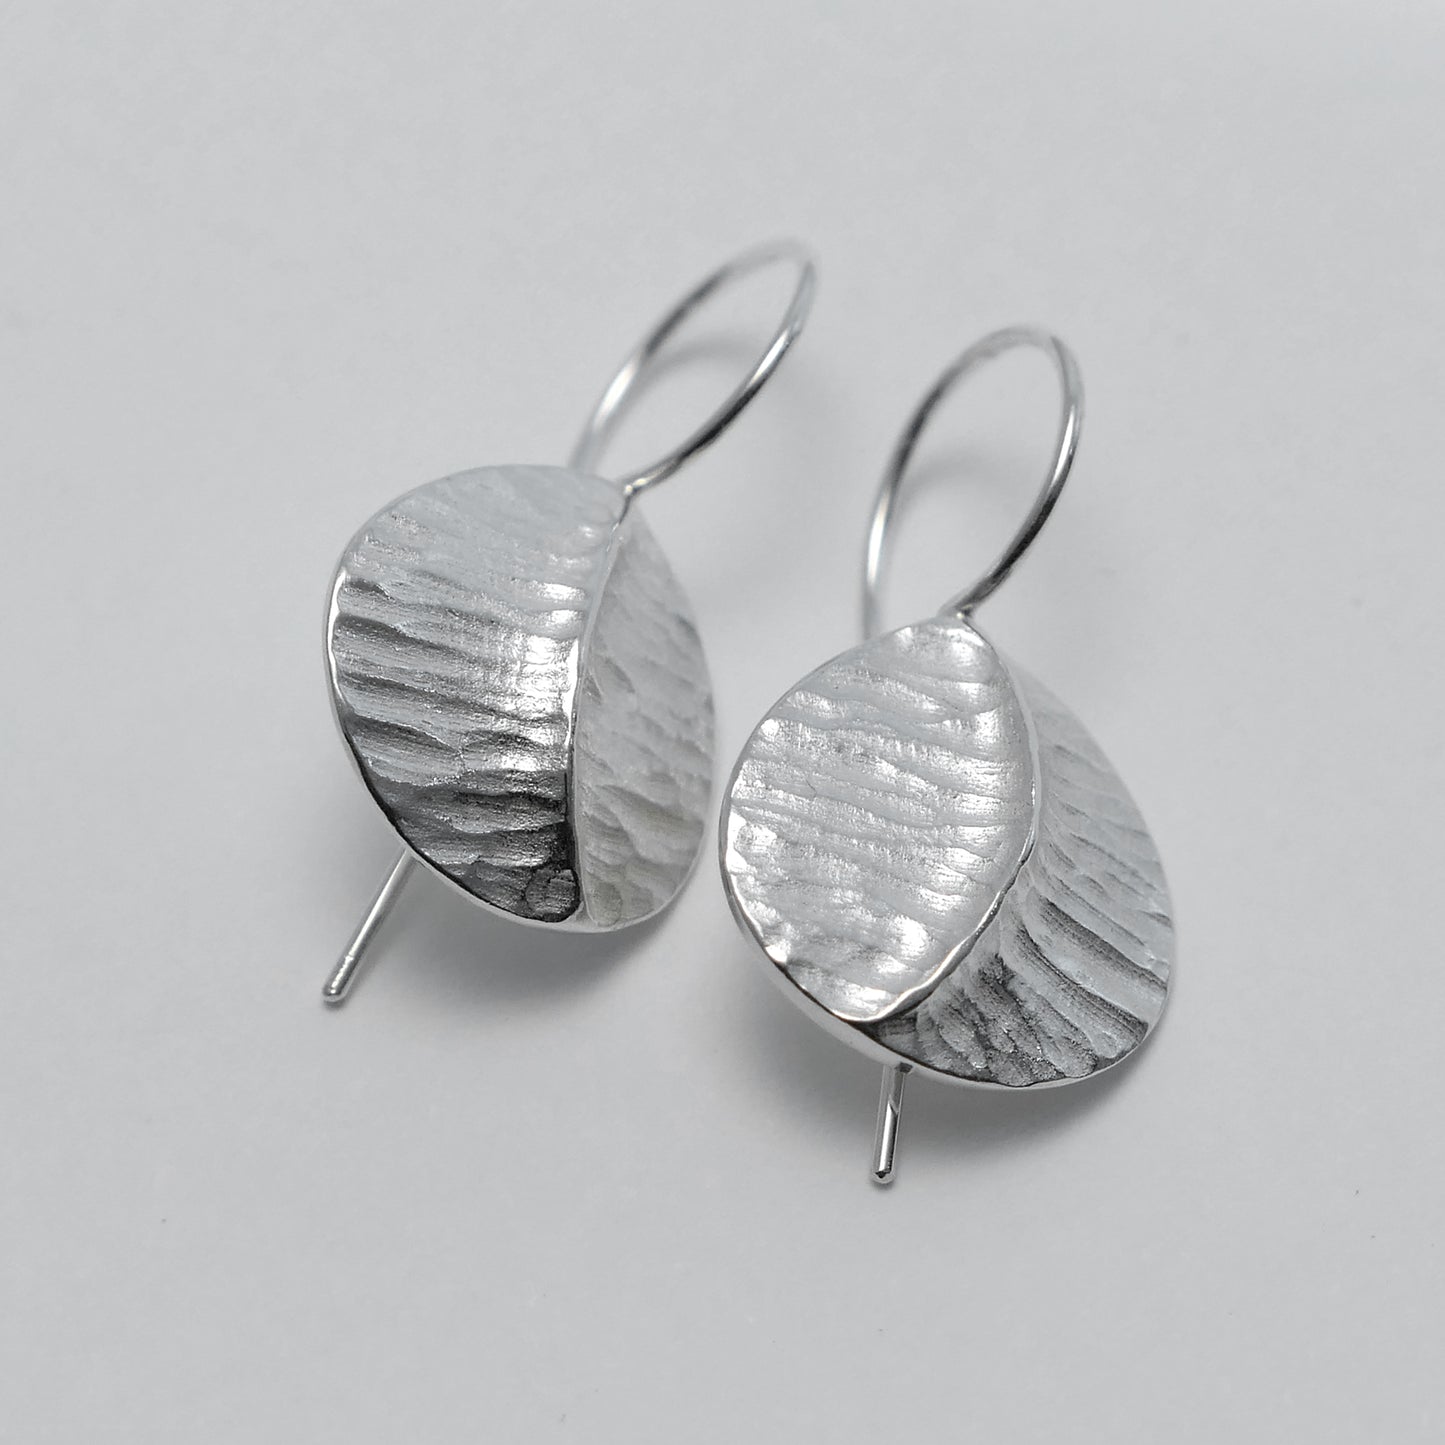 Small sterling silver 'Leaf' earrings